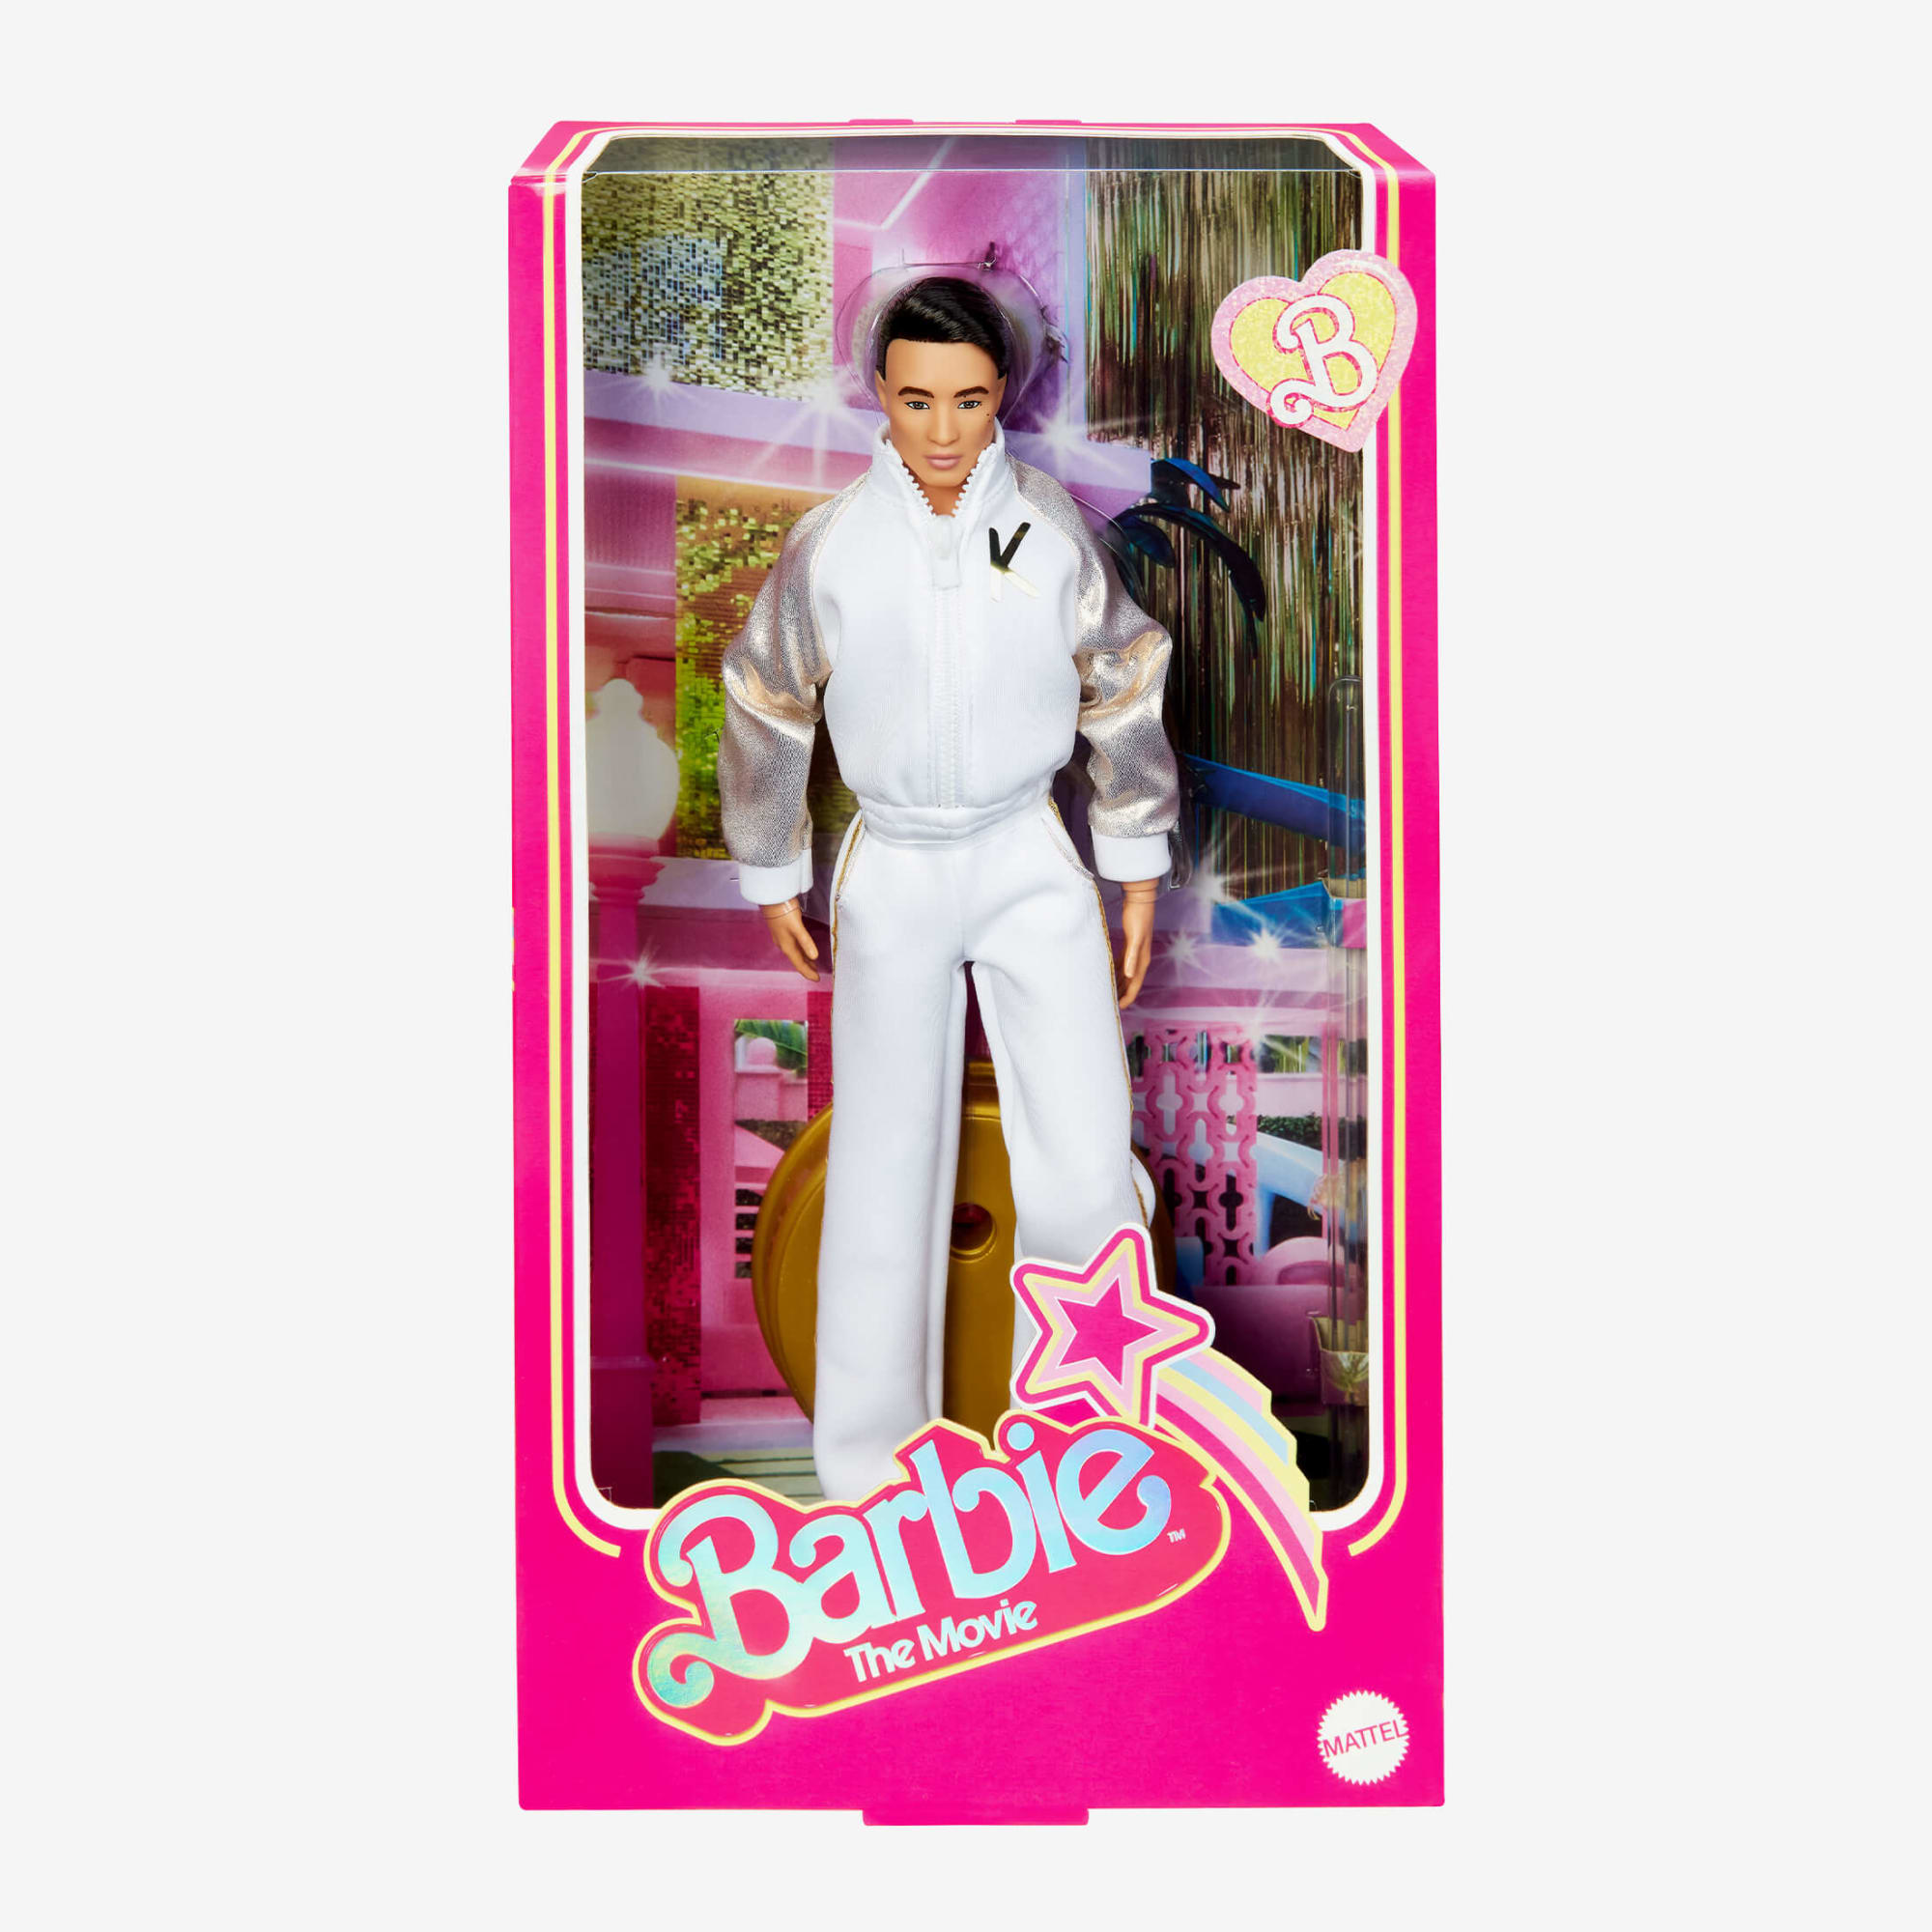 Barbie: The Movie Super Ken Tank Top - White